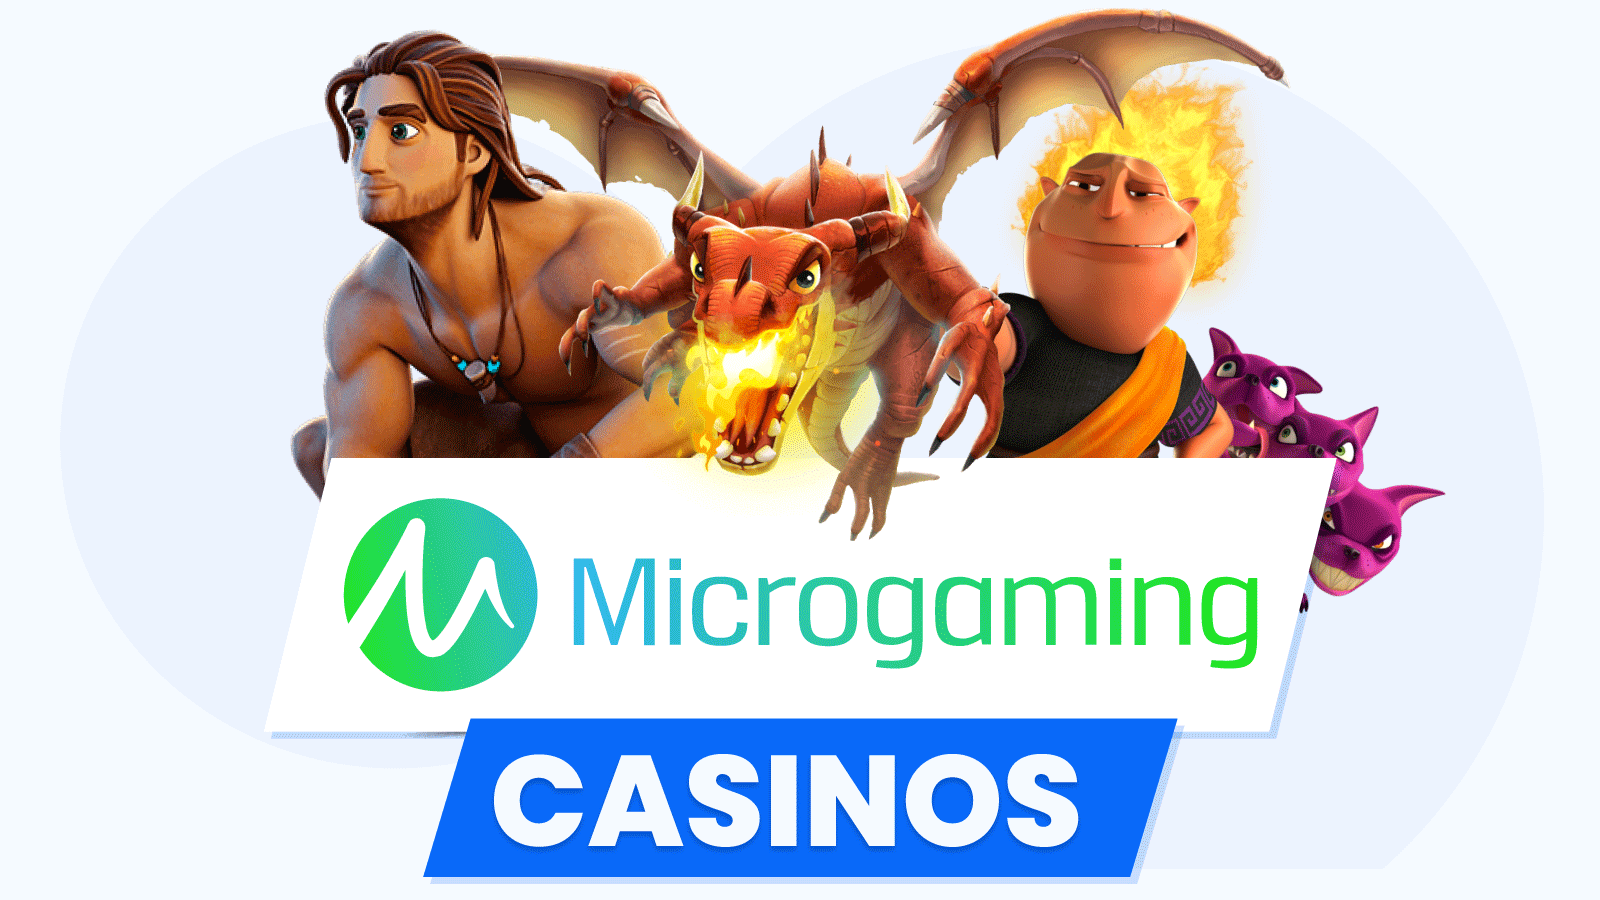 New Microgaming Casino Bonuses & Free Spins